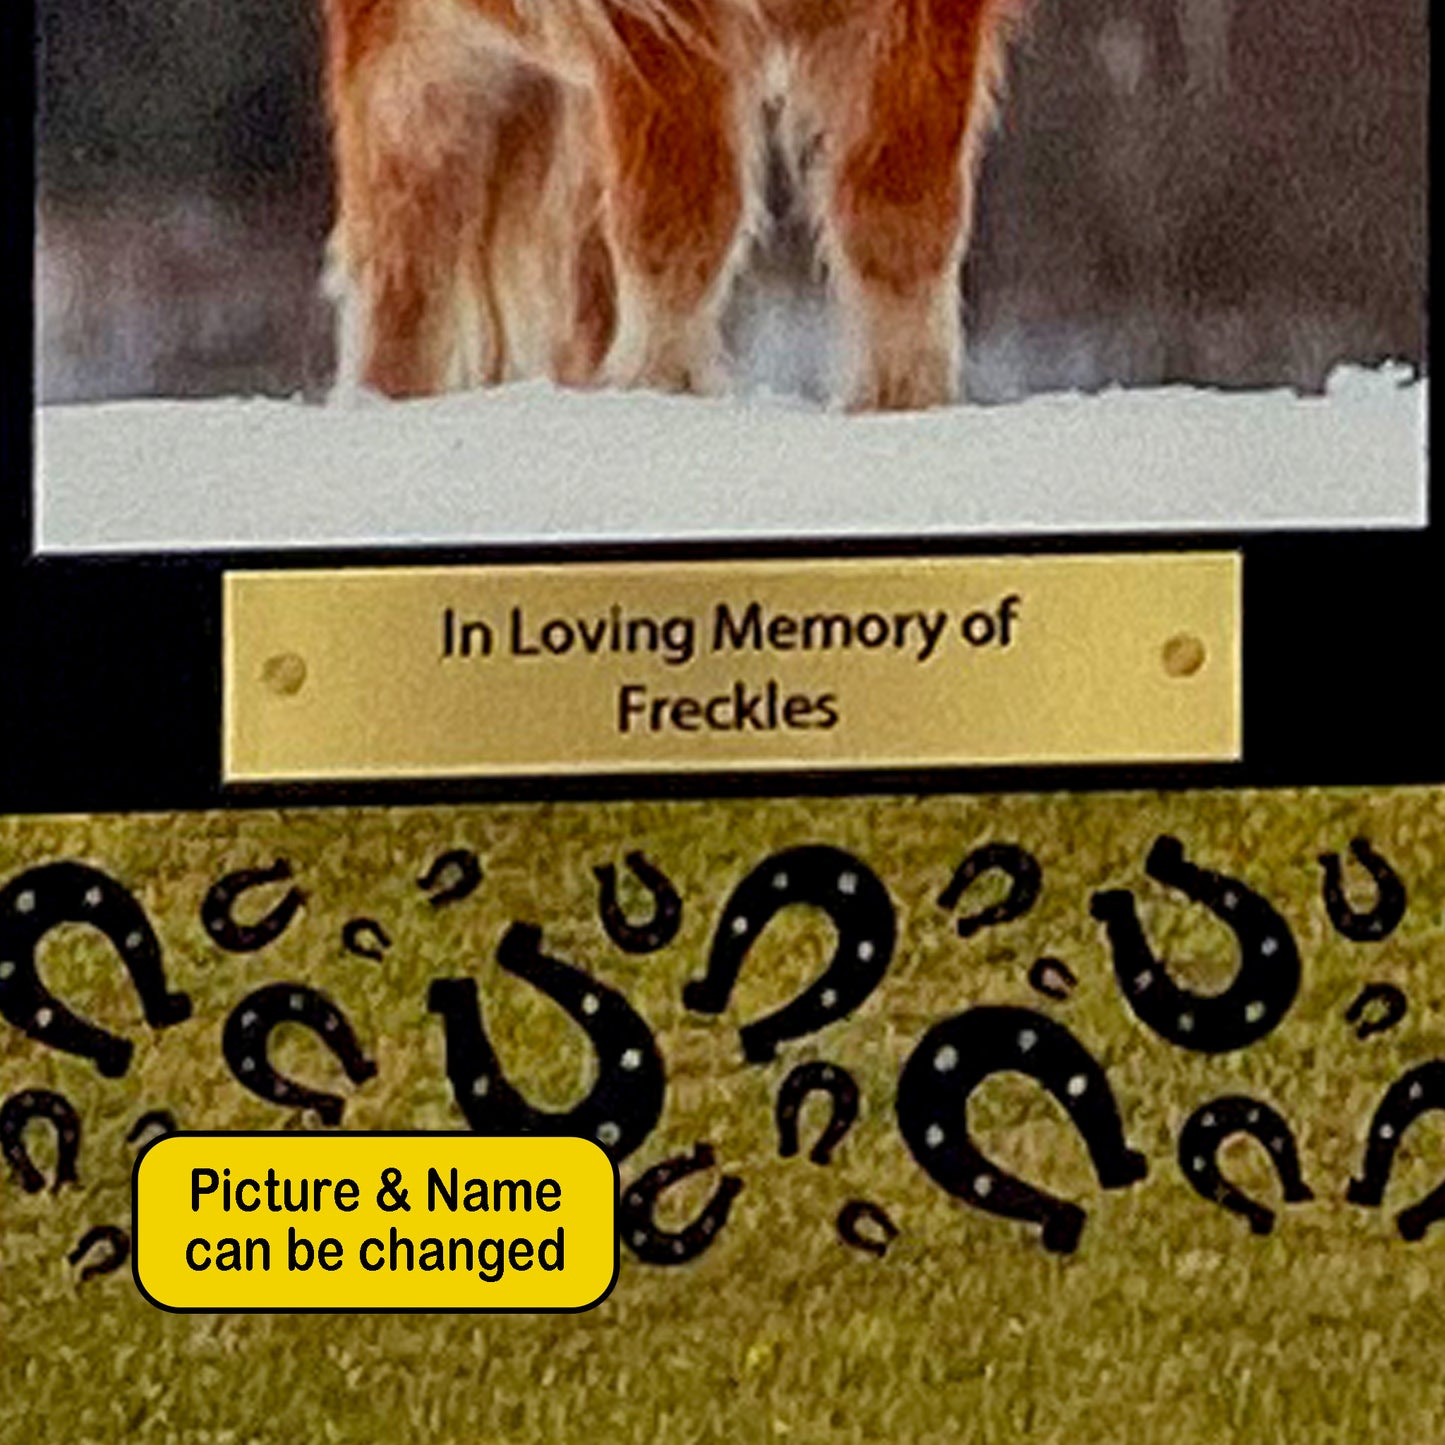 Rainbow Bridge Hoof Print Horse Memorial Plaque | Sympathy Gift Pet Loss | Keepsake | Equine Horse Bereavement Keepsake Photo Frame Sign